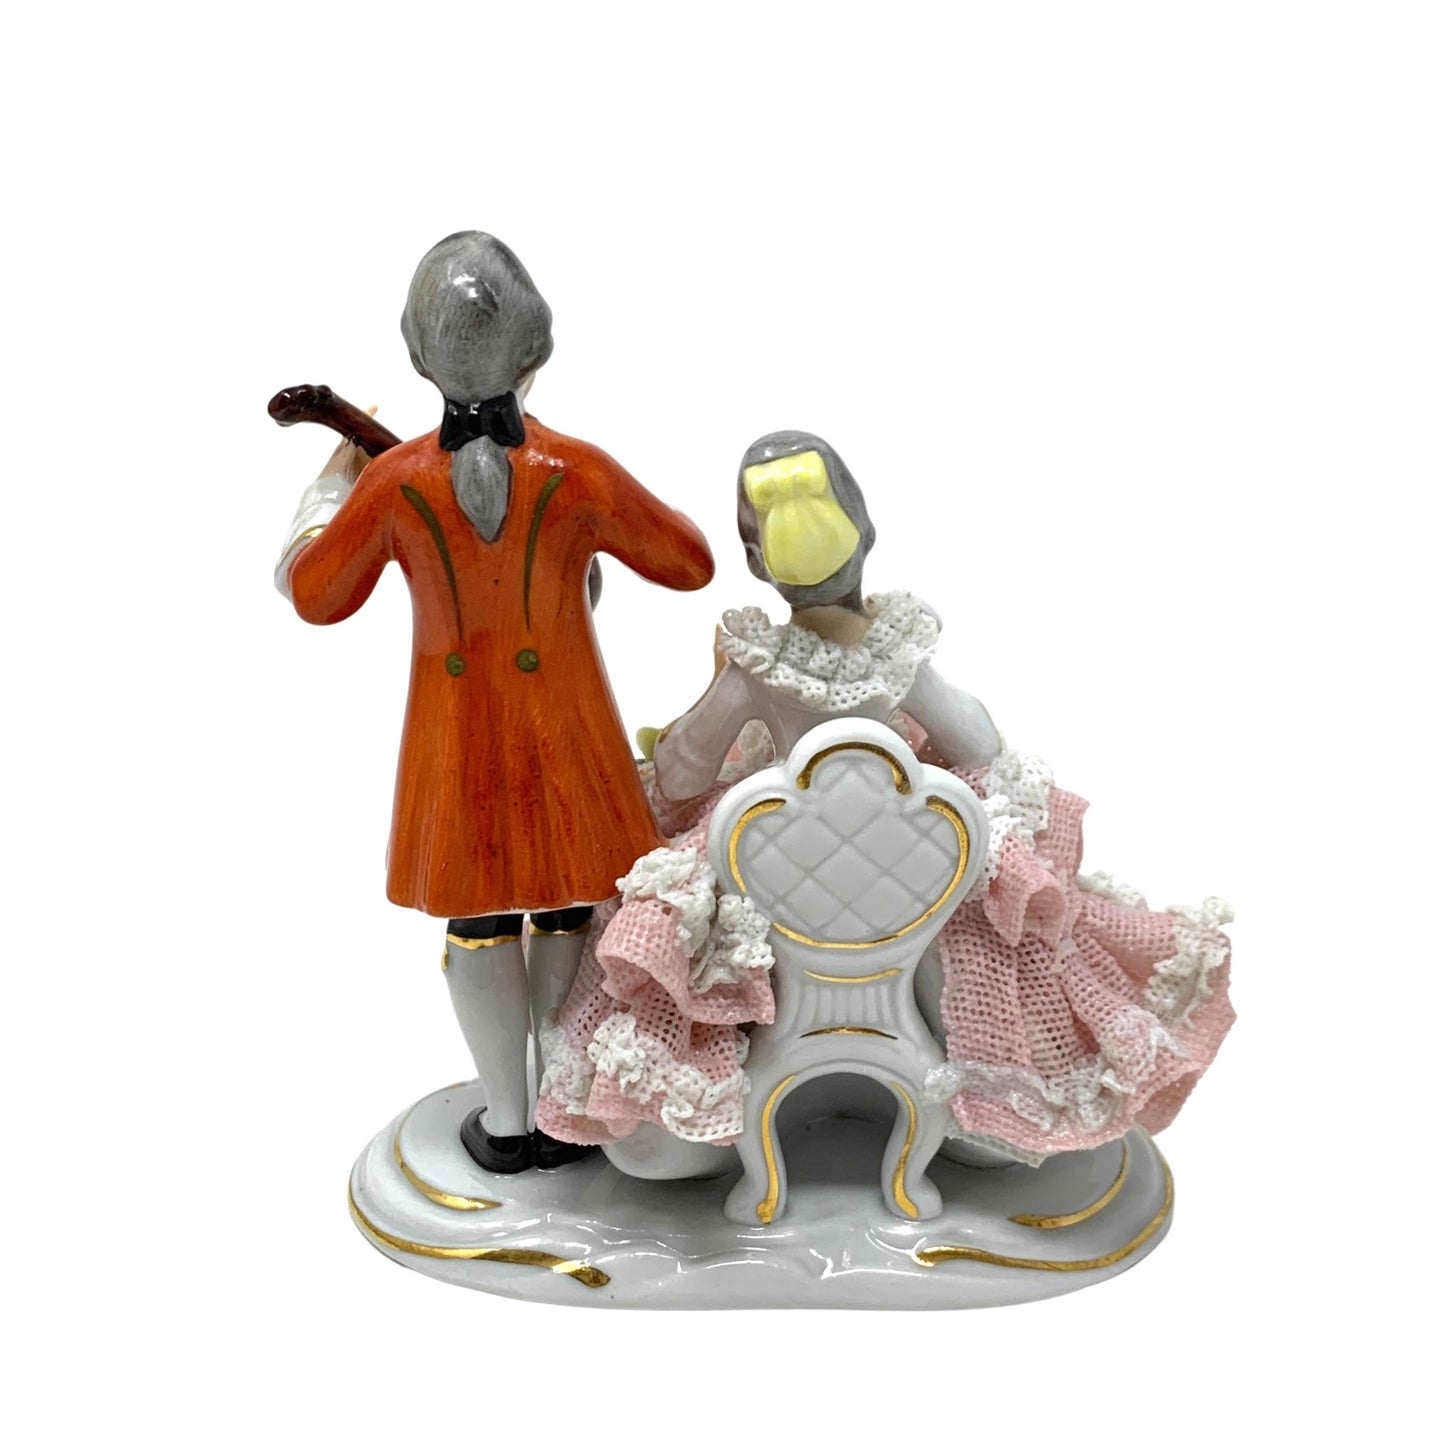 Dresden Lace Sandizell Romantic Couple Figurine